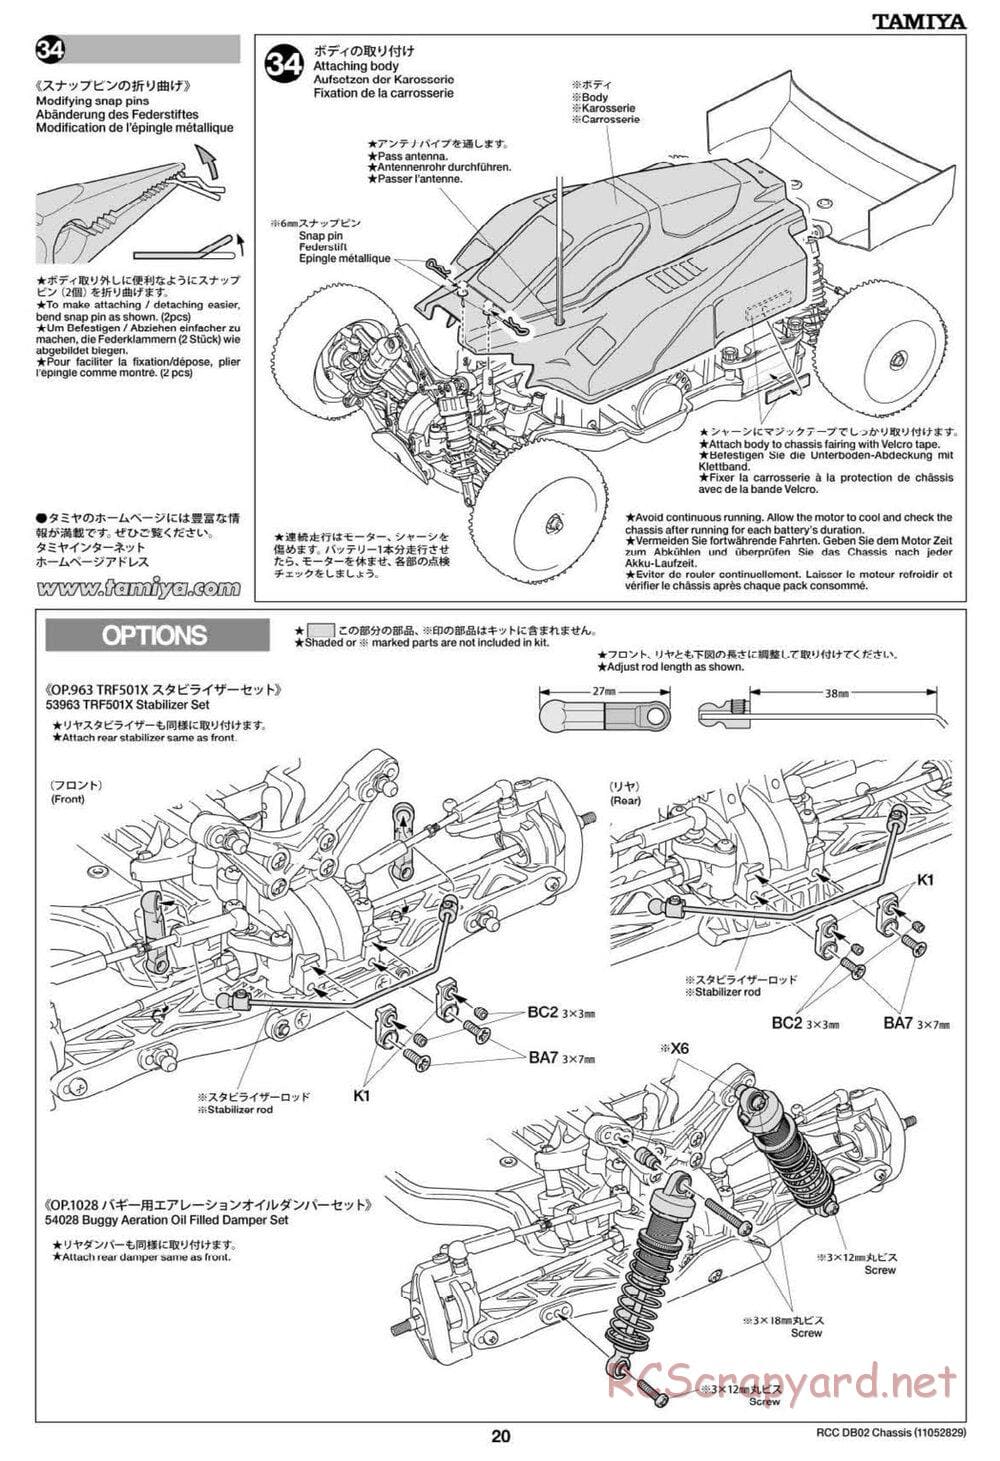 Tamiya - Leonis - DB-02 Chassis - Manual - Page 20